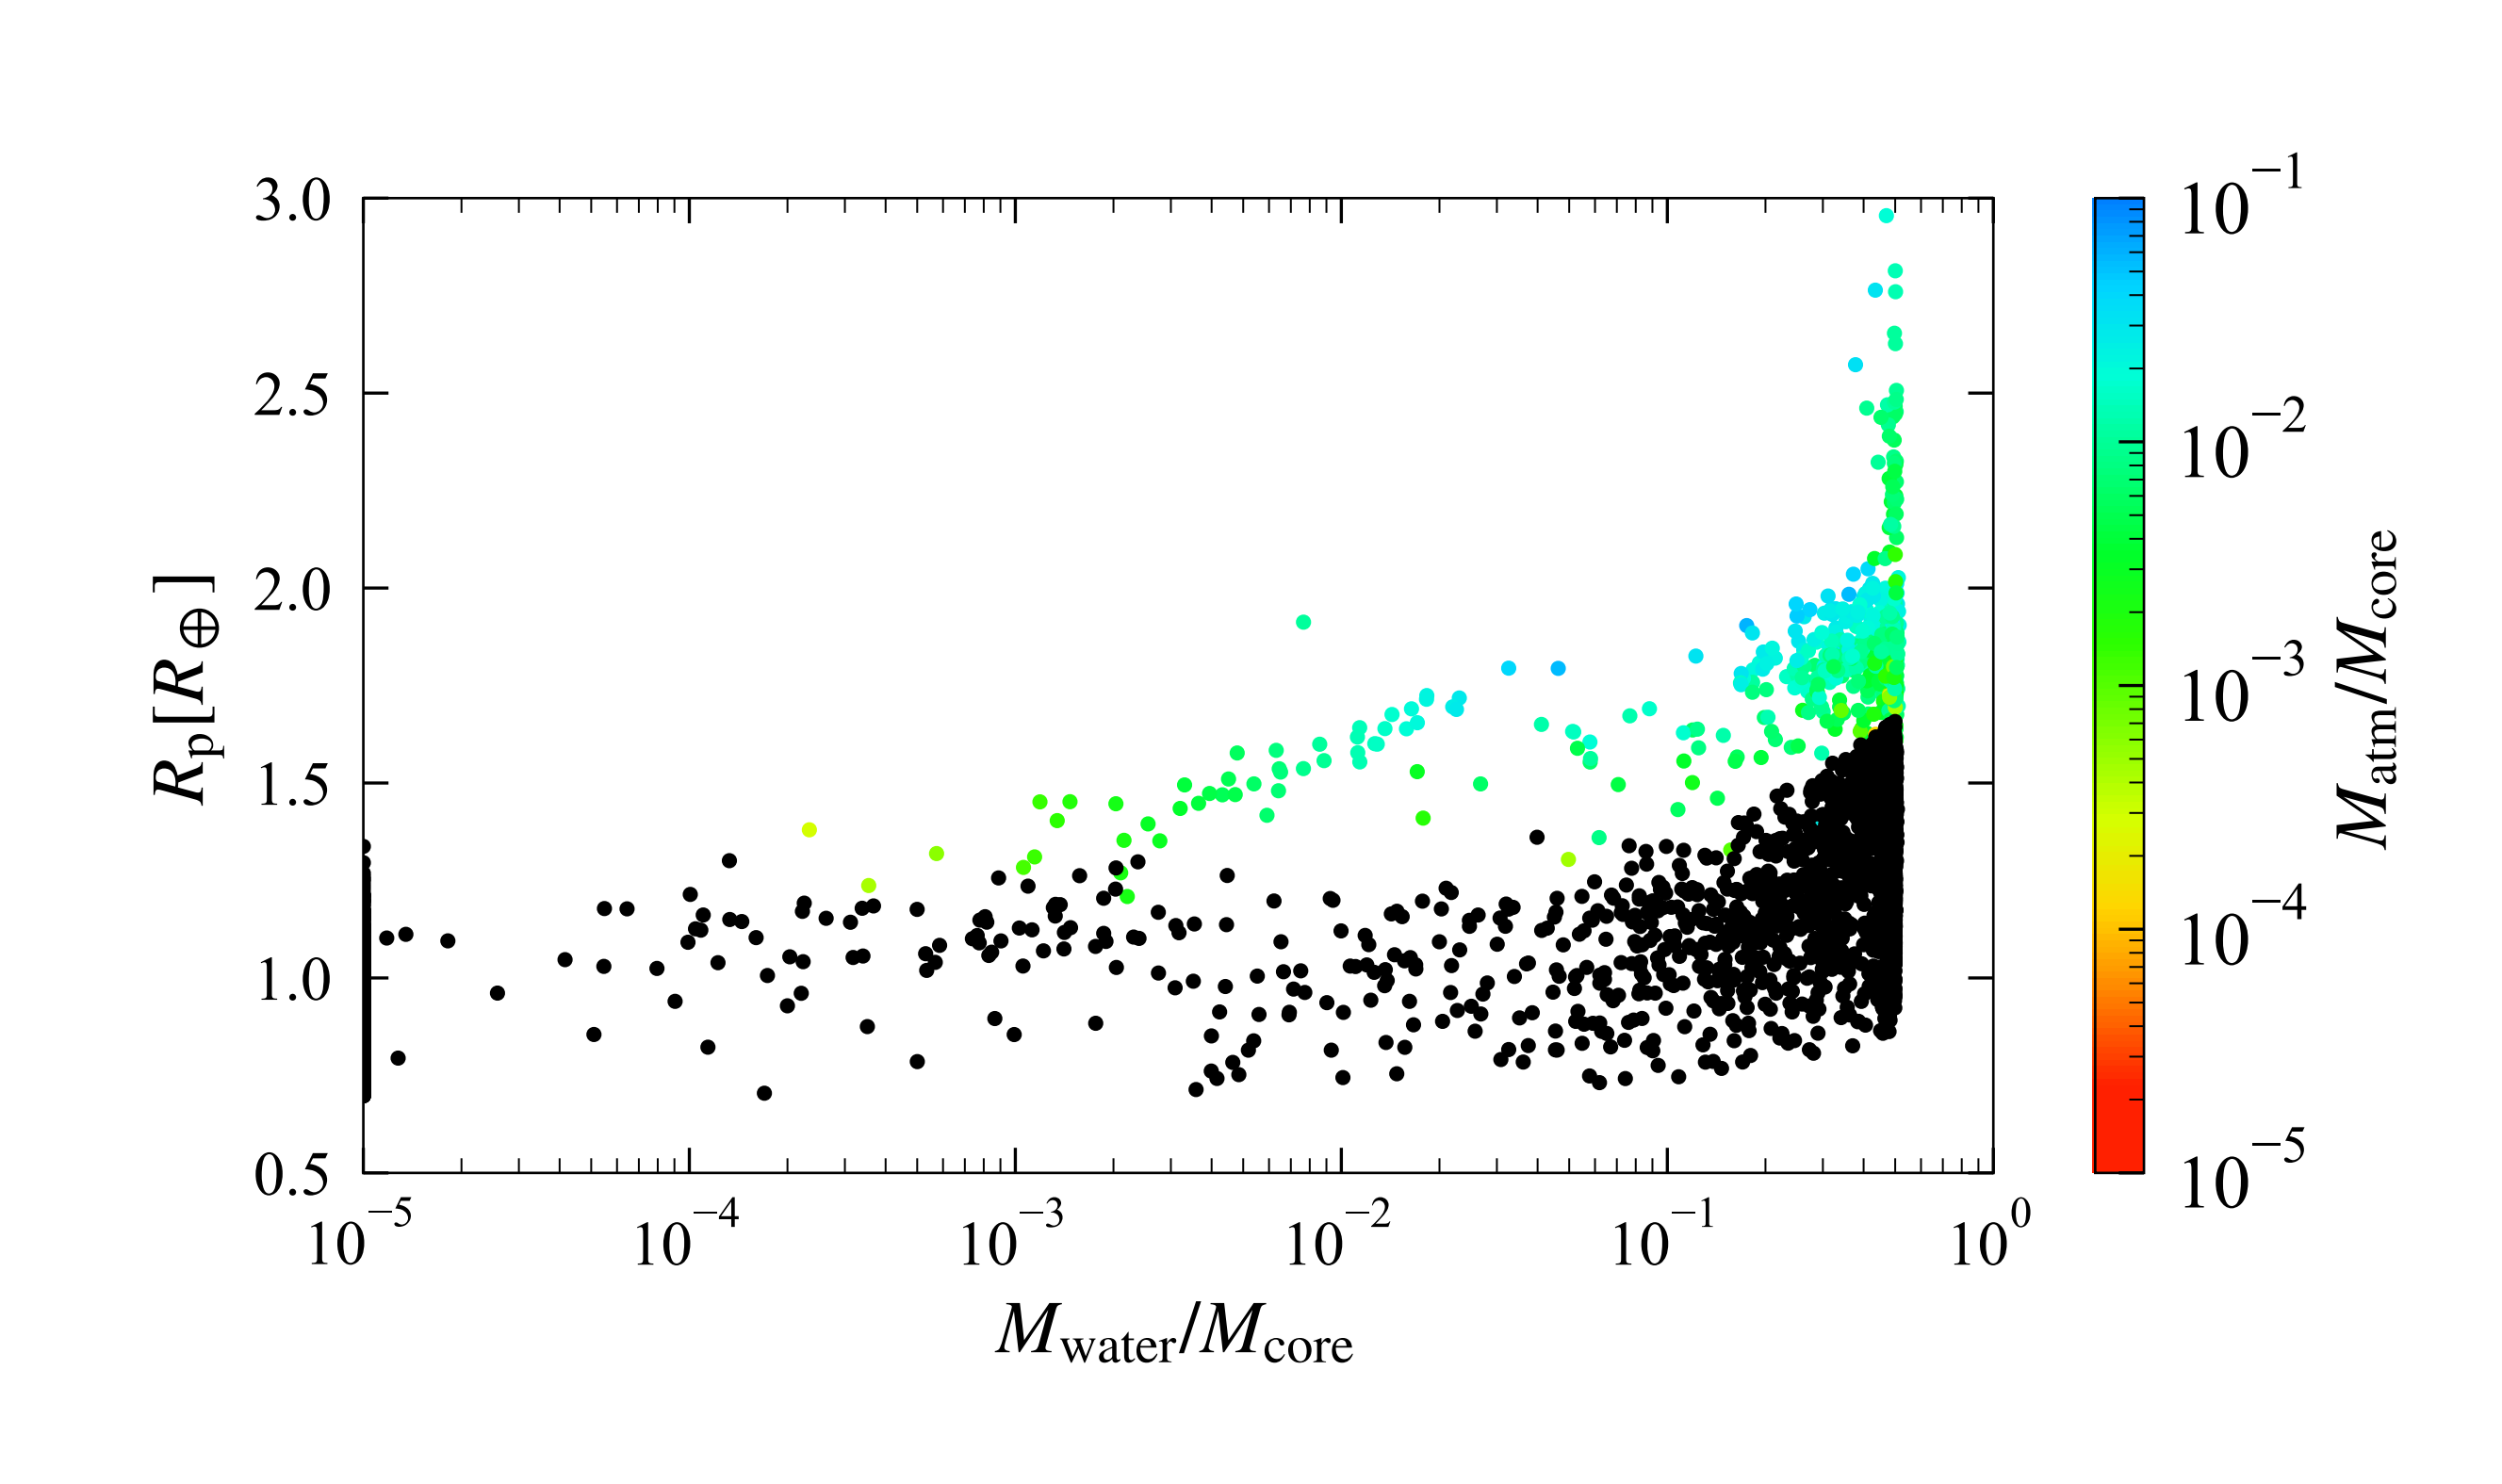 Predicted Diversity In Water Content Of Terrestrial Exoplanets Orbiting M Dwarfs